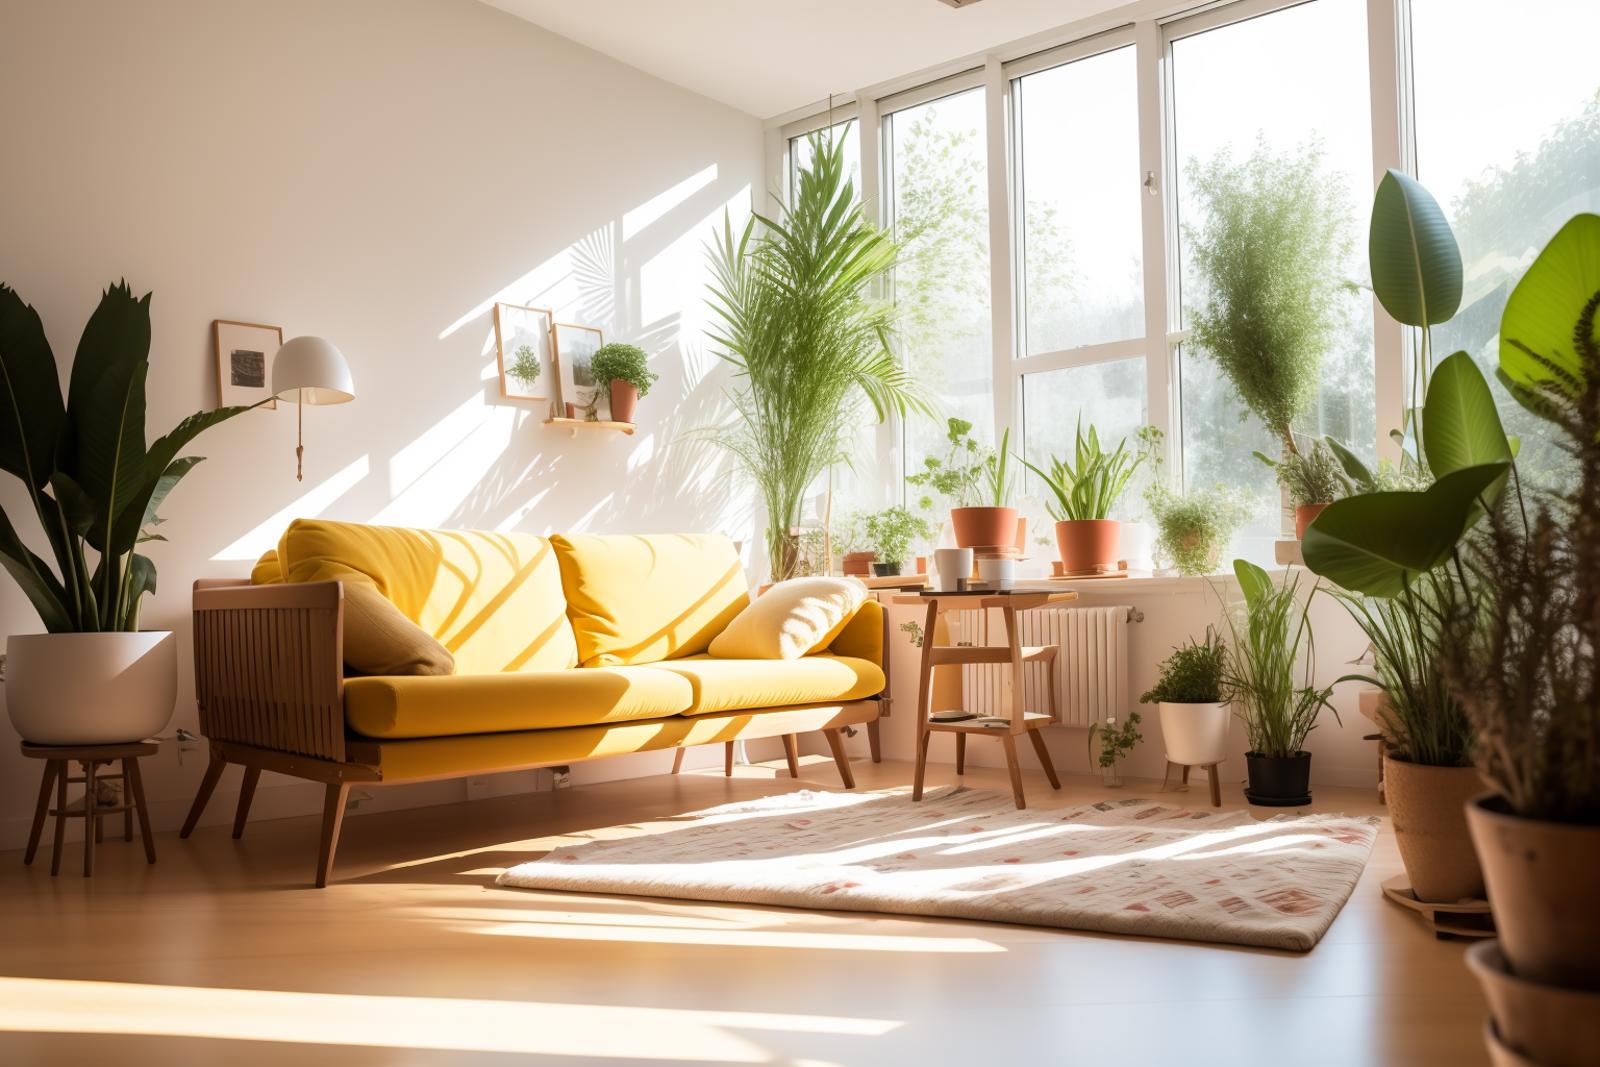 Cozy Interior Style image by wuwuming_Hansen